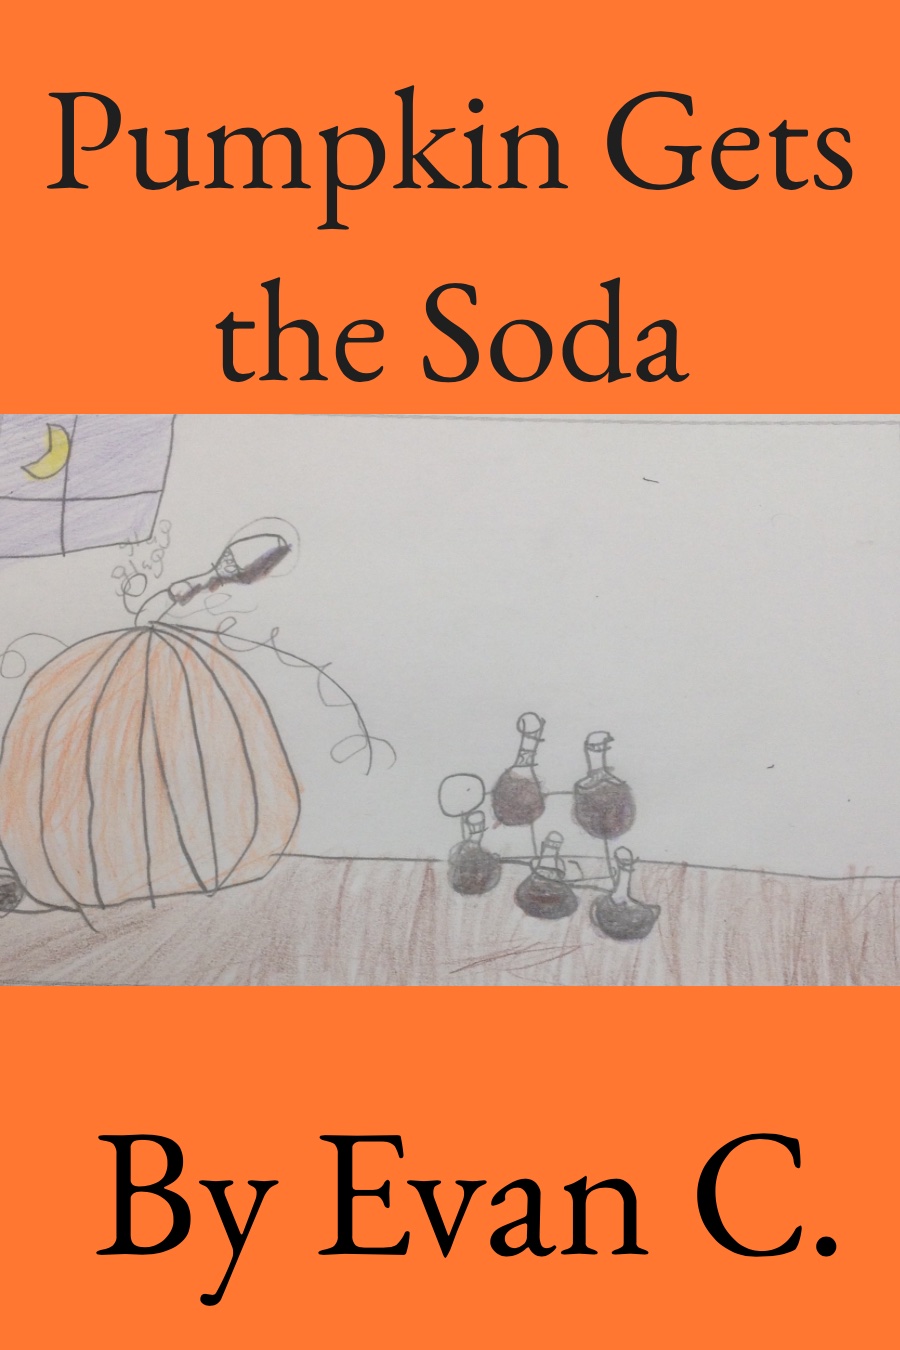 Pumpkin Gets the Soda by Evan C